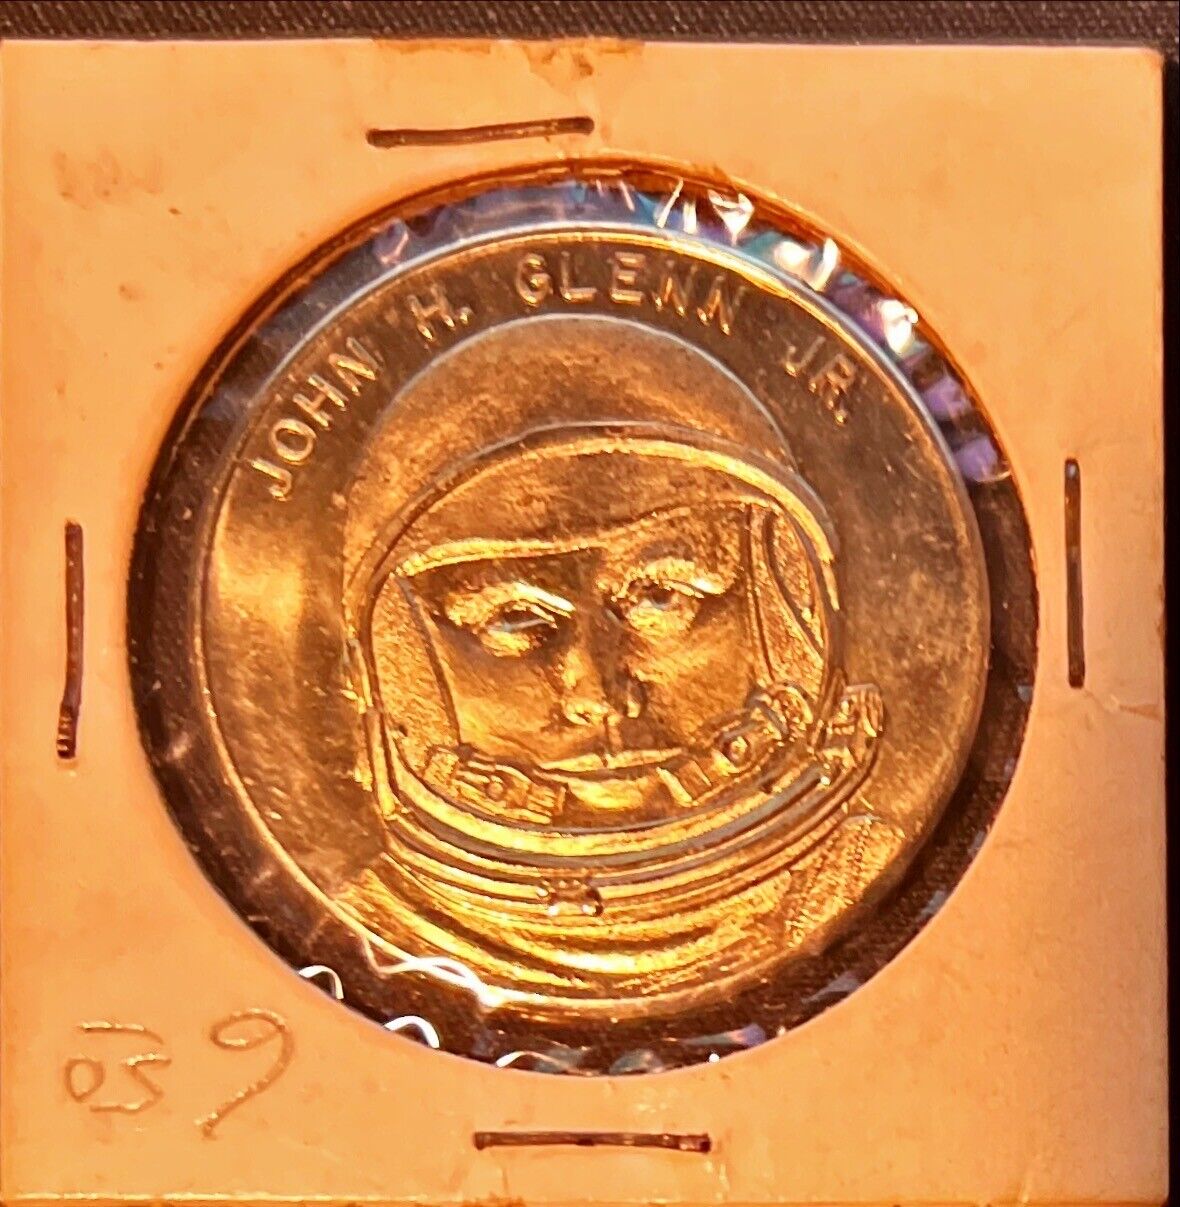 1962 John Glenn Project Mercury Orbital US Man in Space Flight Coin Token